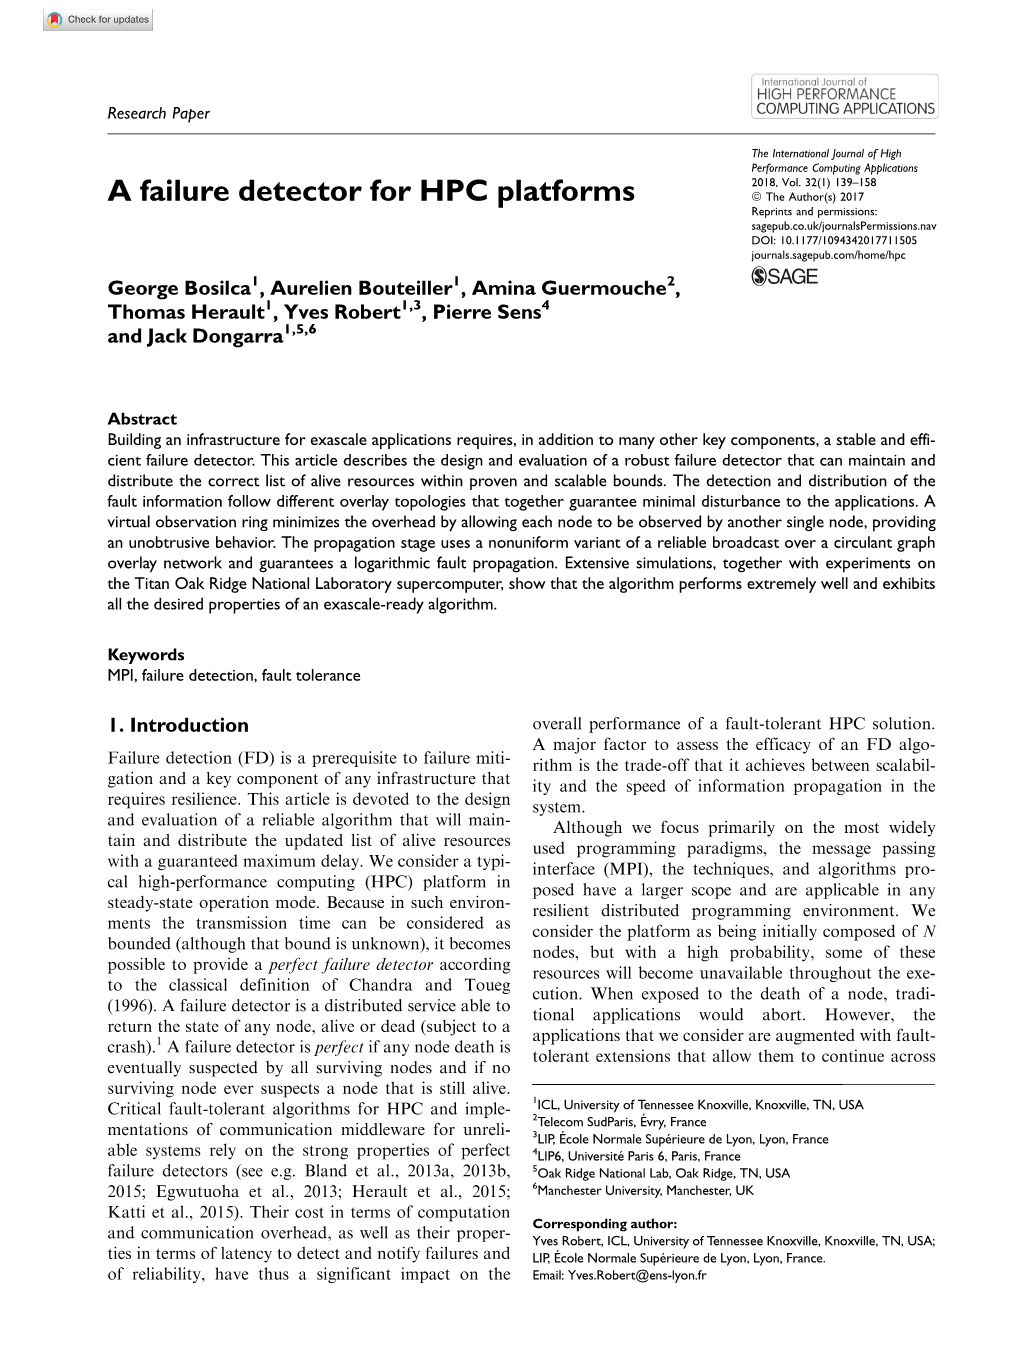 A Failure Detector for HPC Platforms